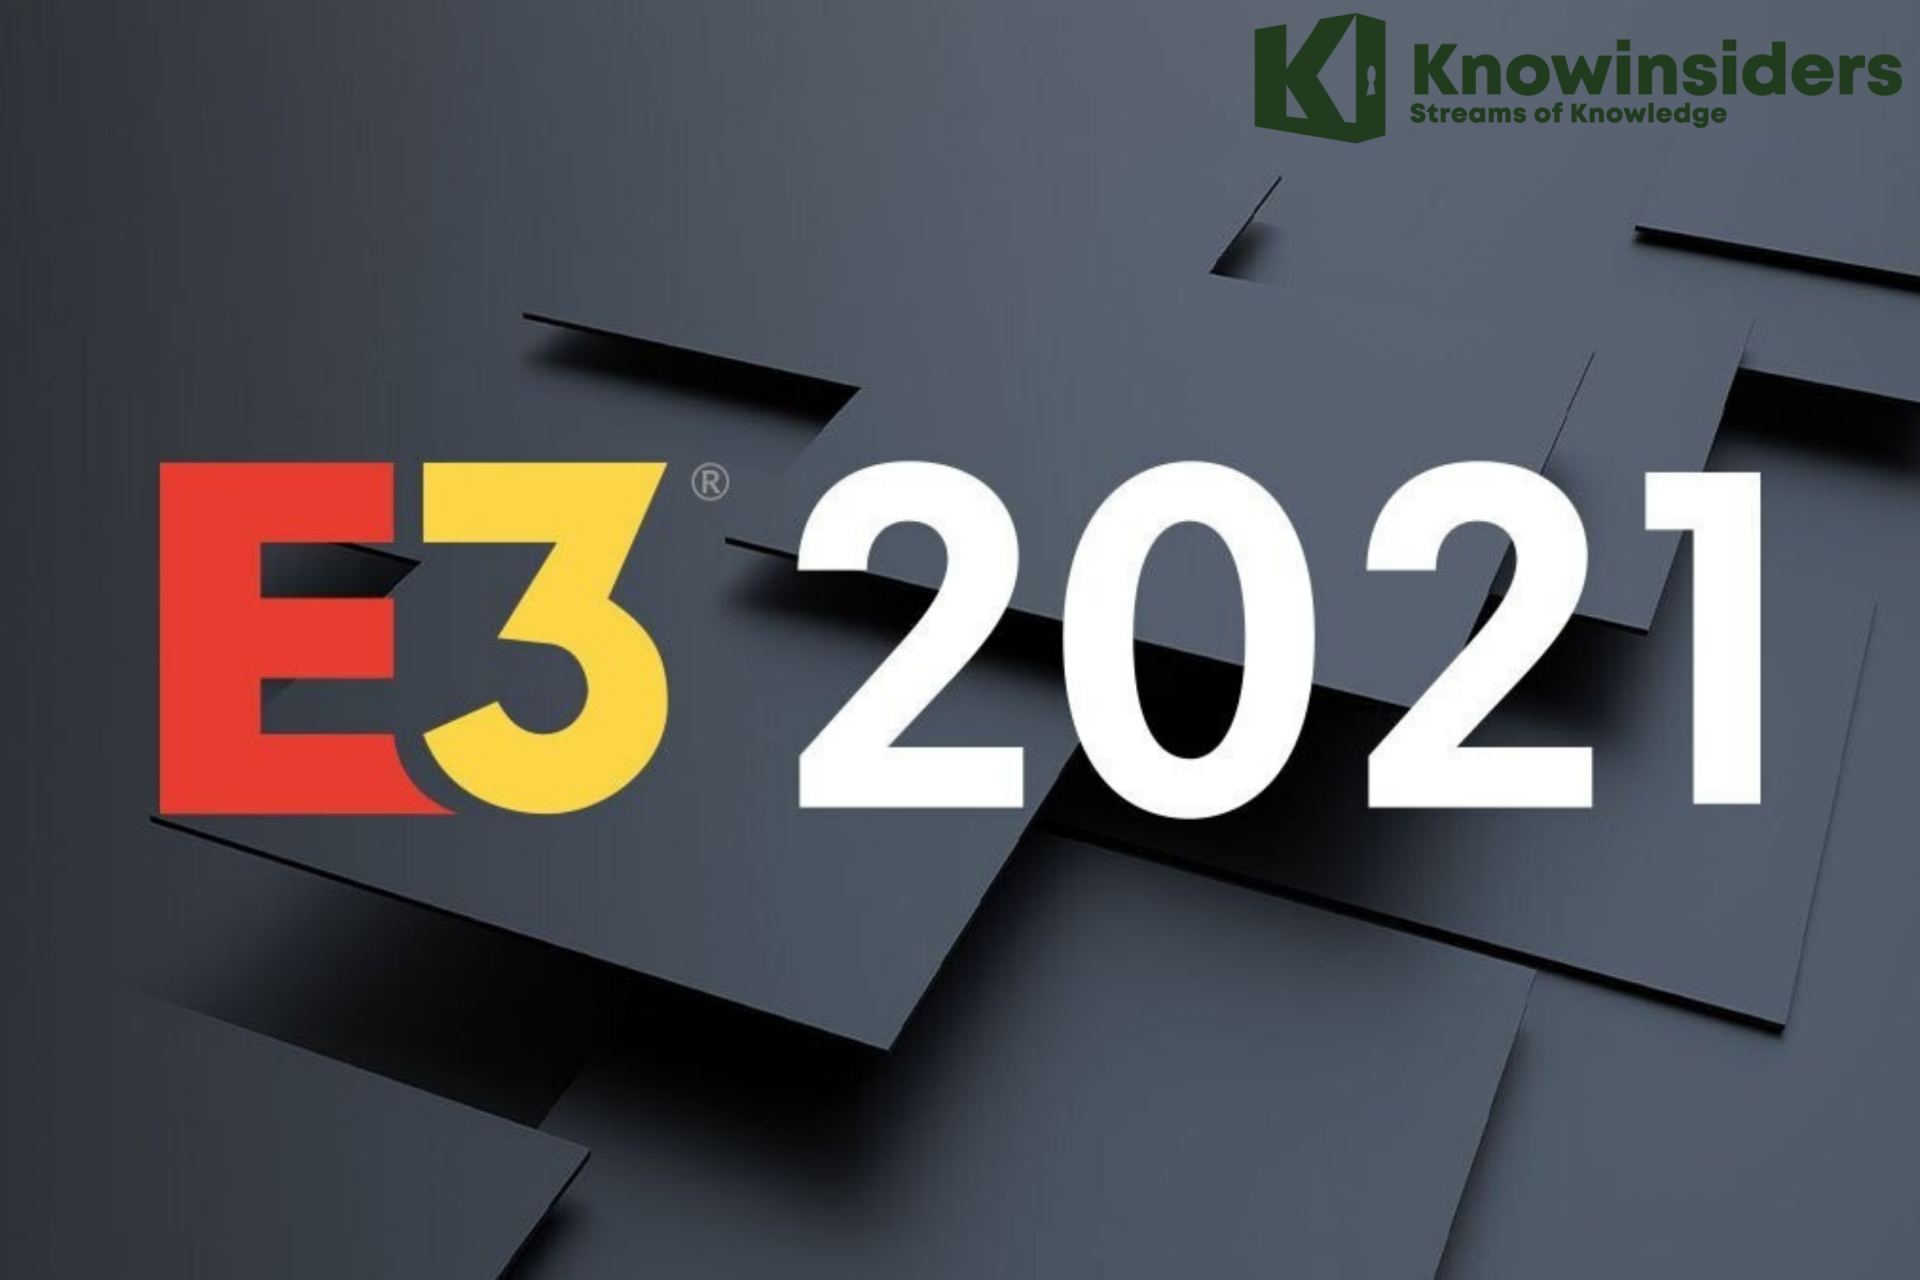 E3 2021 Online & Free: Dates, Companies & How To Stream